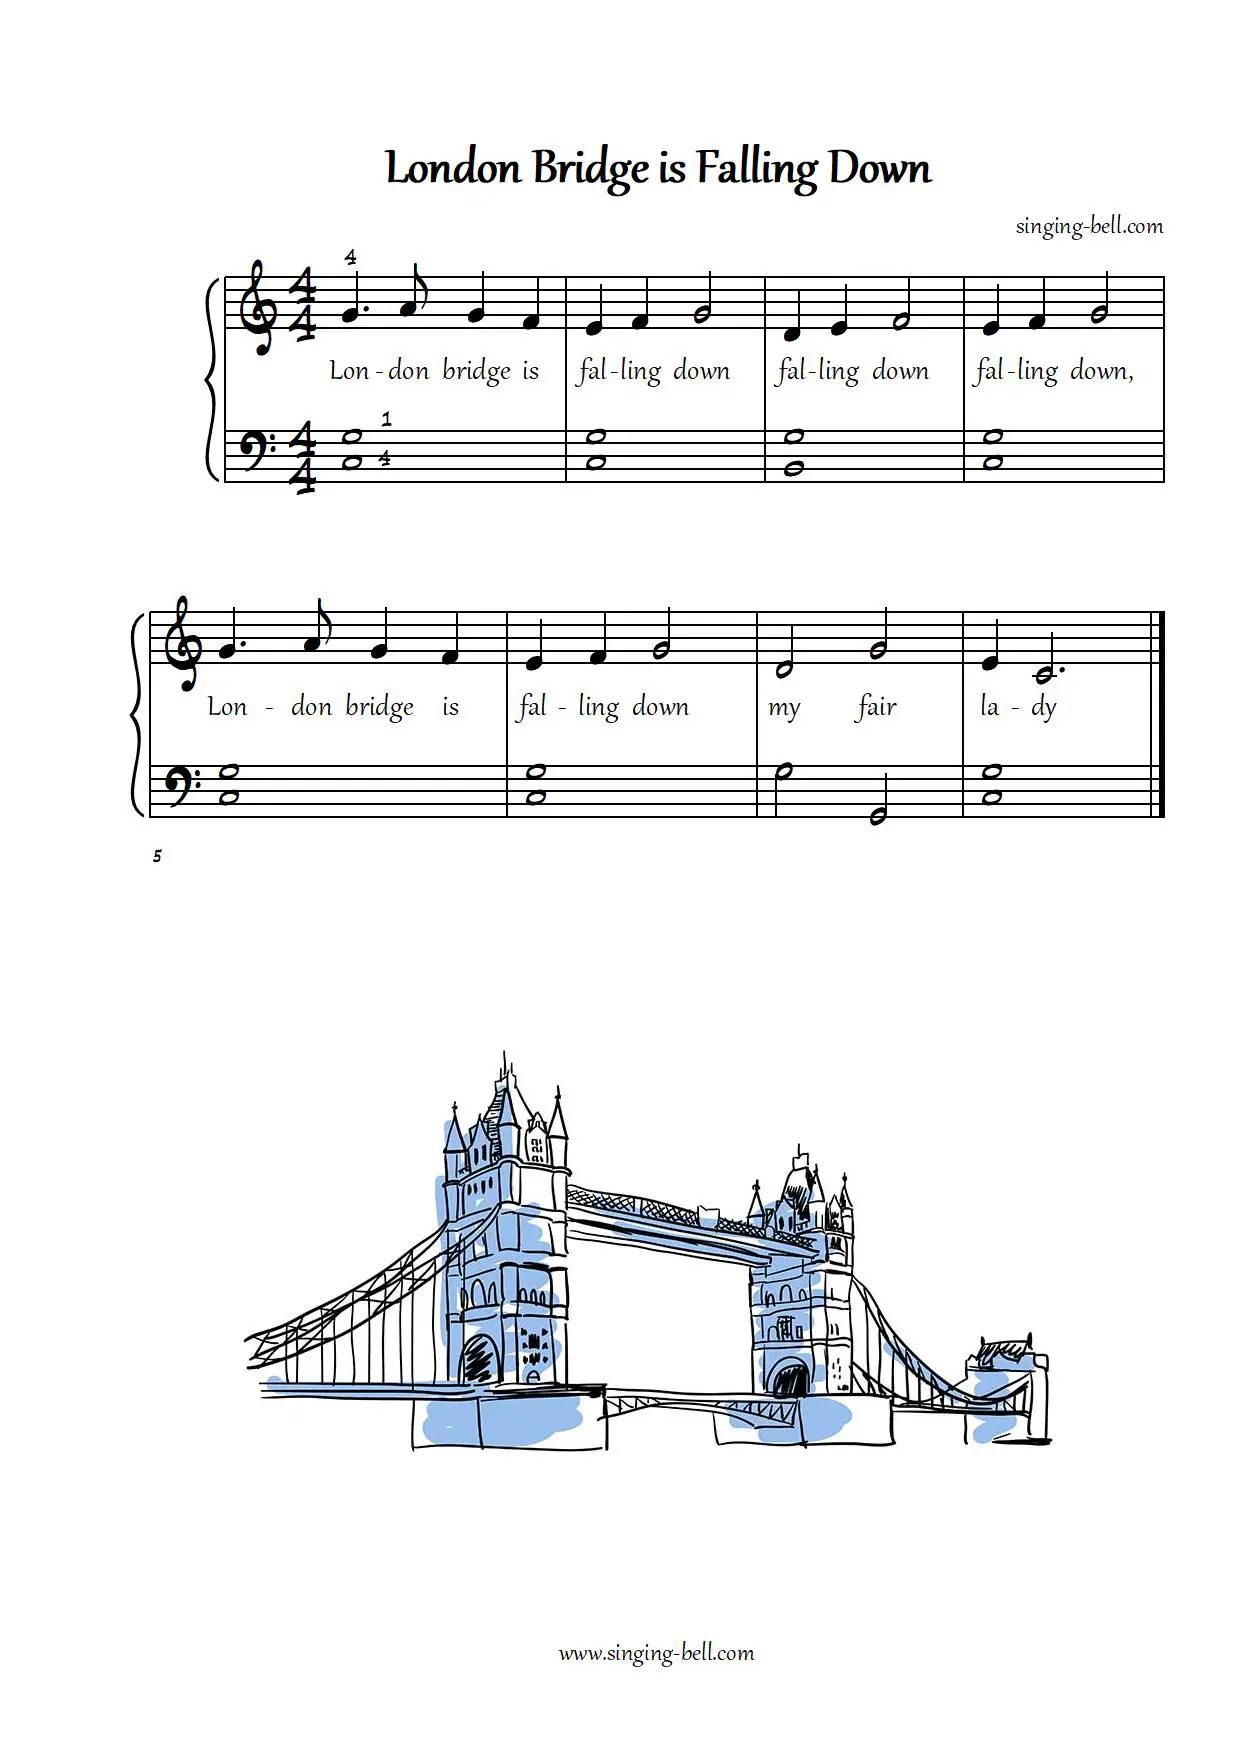 London Bridge Is Falling Down easy piano sheet music notes chords beginners pdf